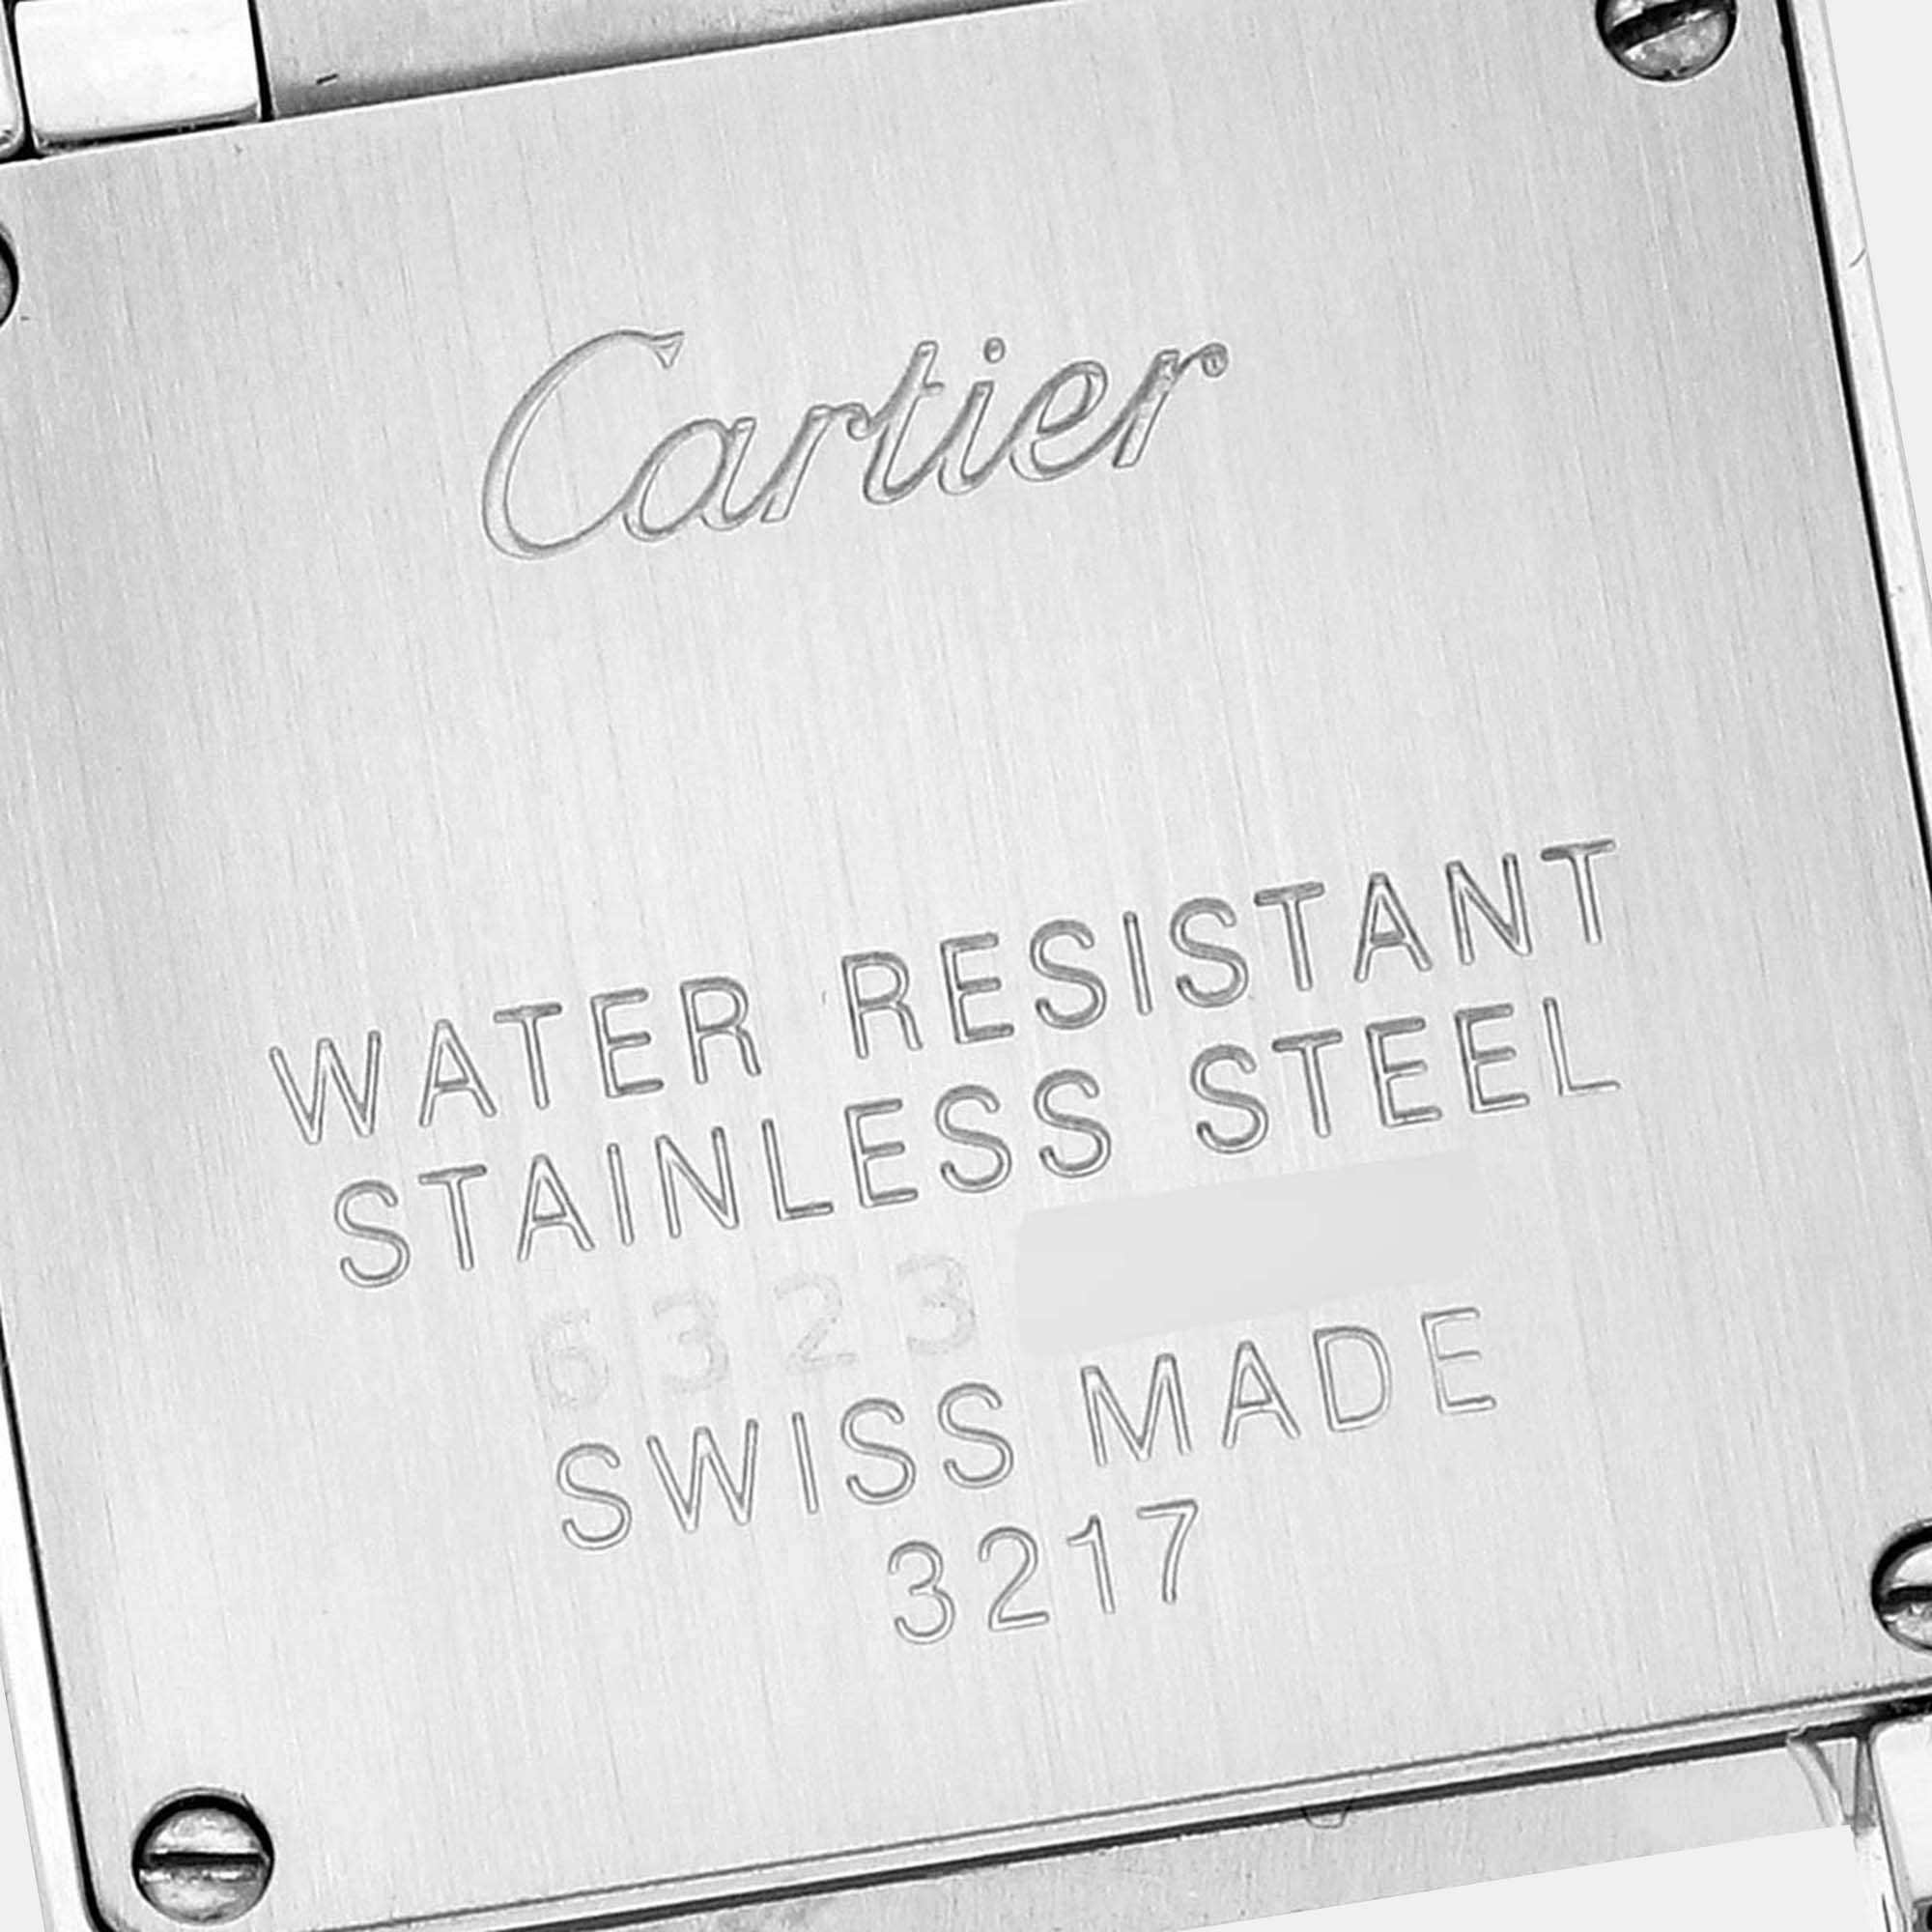 Cartier Tank Francaise Small Steel Diamond Bezel Ladies Watch W4TA0008 20 X 25 Mm